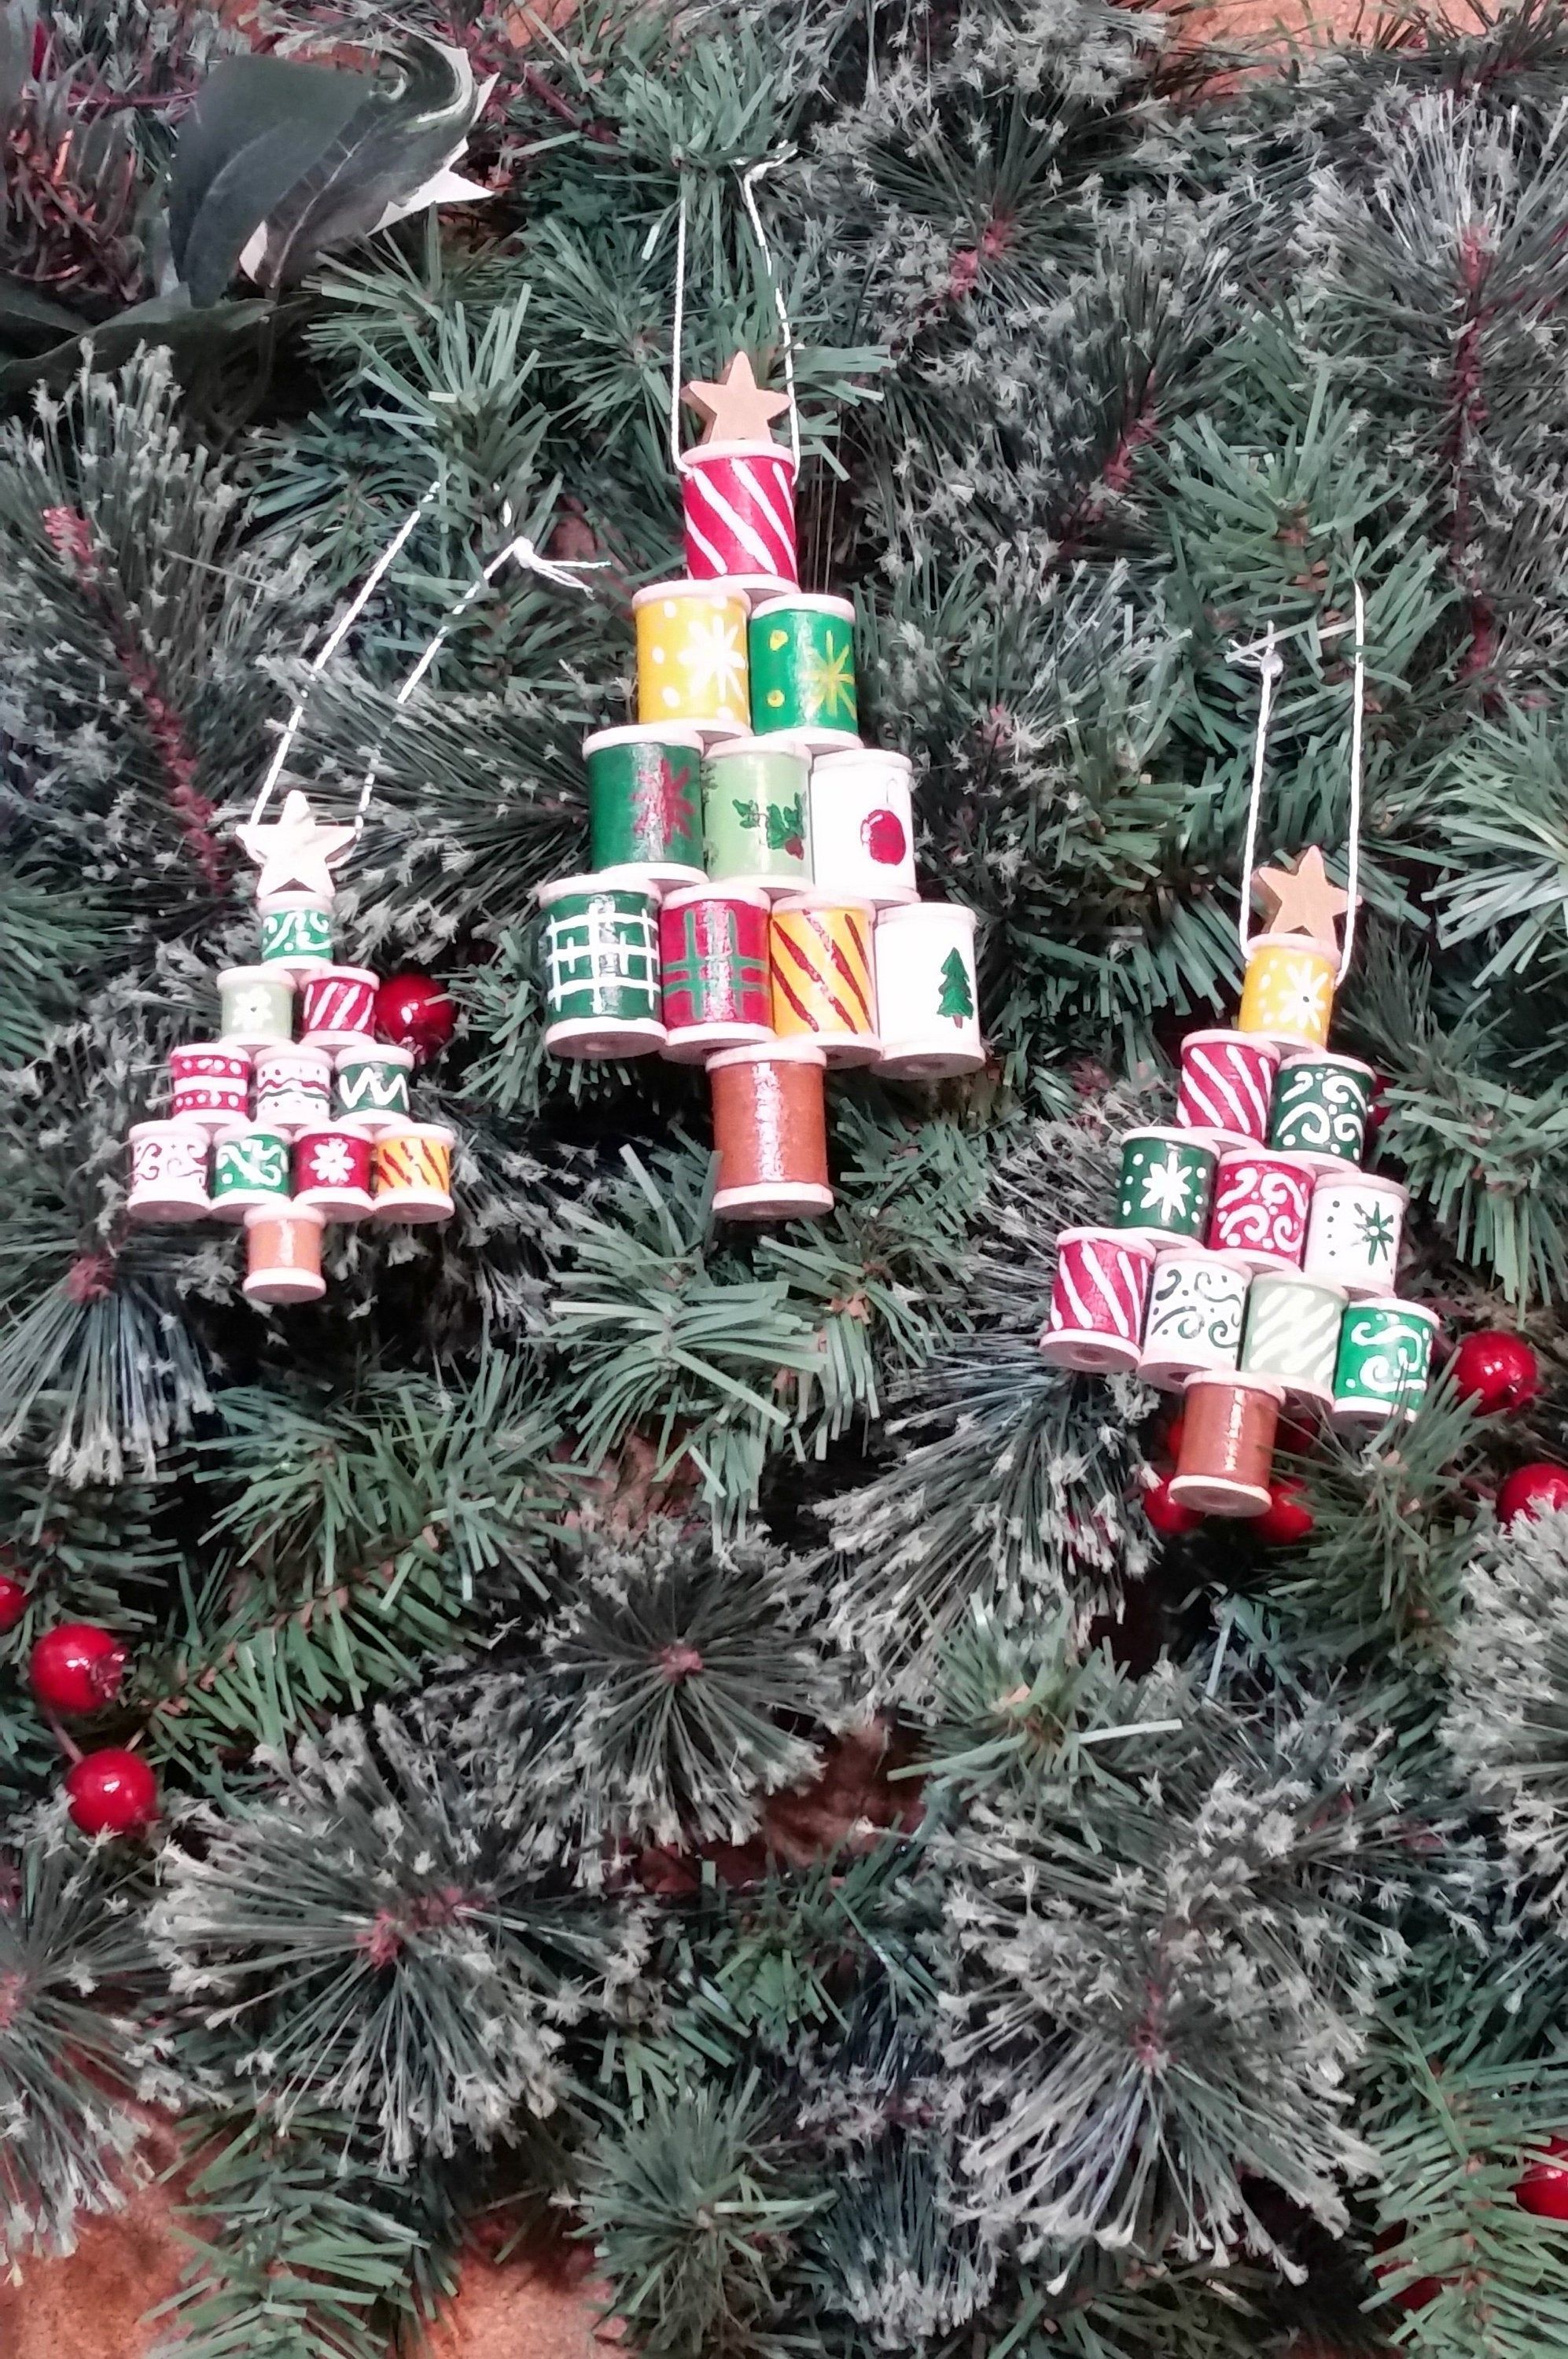 Spool tree, tree ornaments set, Spool Christmas ornament, wooden spool Christmas ornament, wood ornament, wood tree ornament, ornaments set -   19 diy Christmas projects ideas